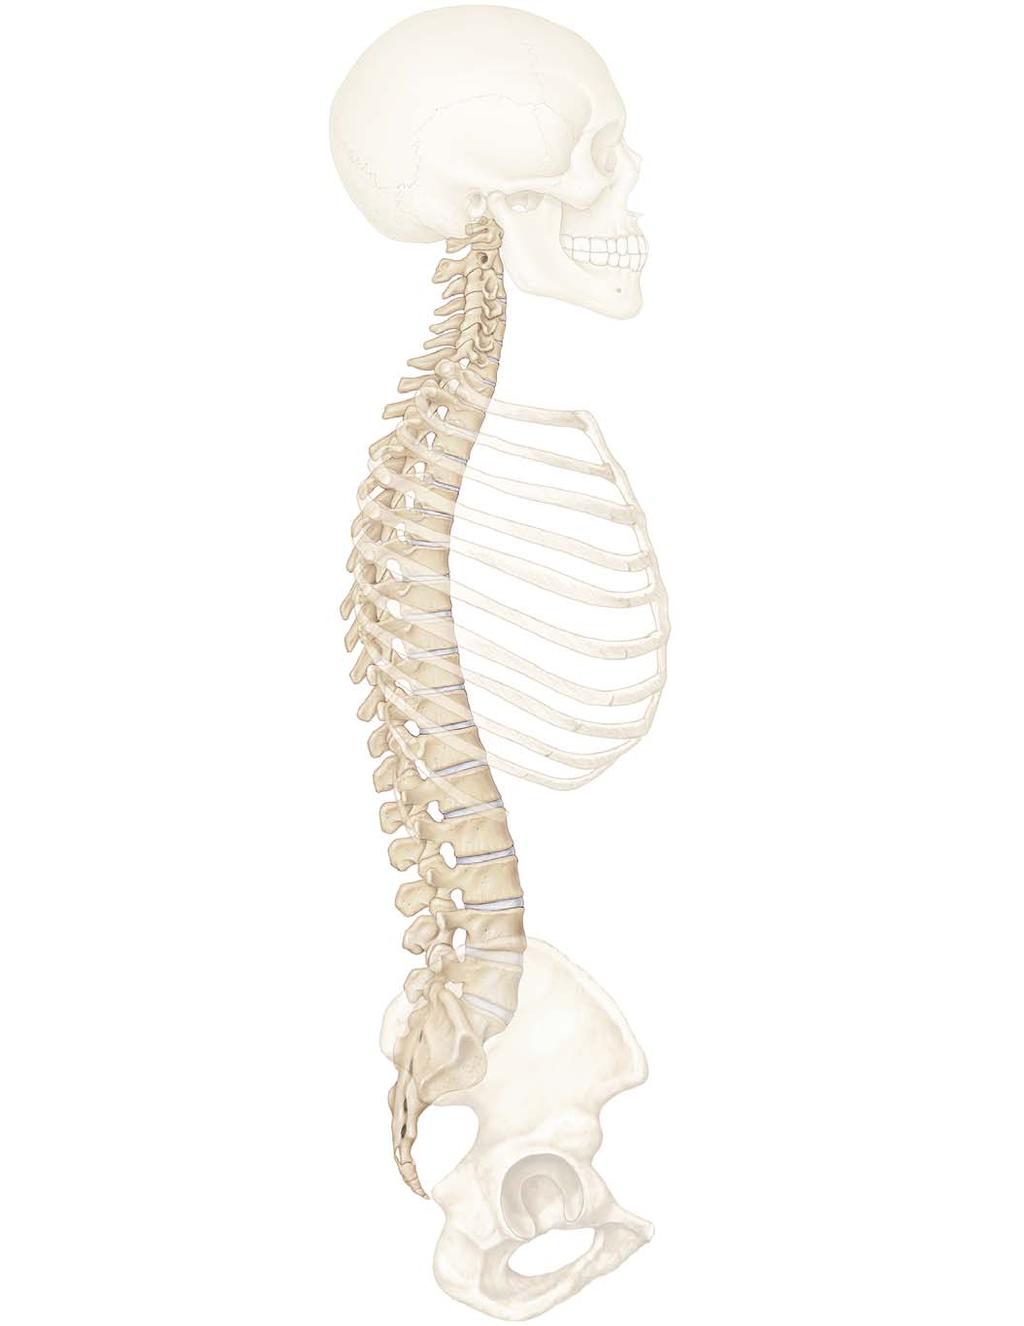 transverse of atlas Lumbar curvature D. Cervical vertebra (C4), superior view Body E.